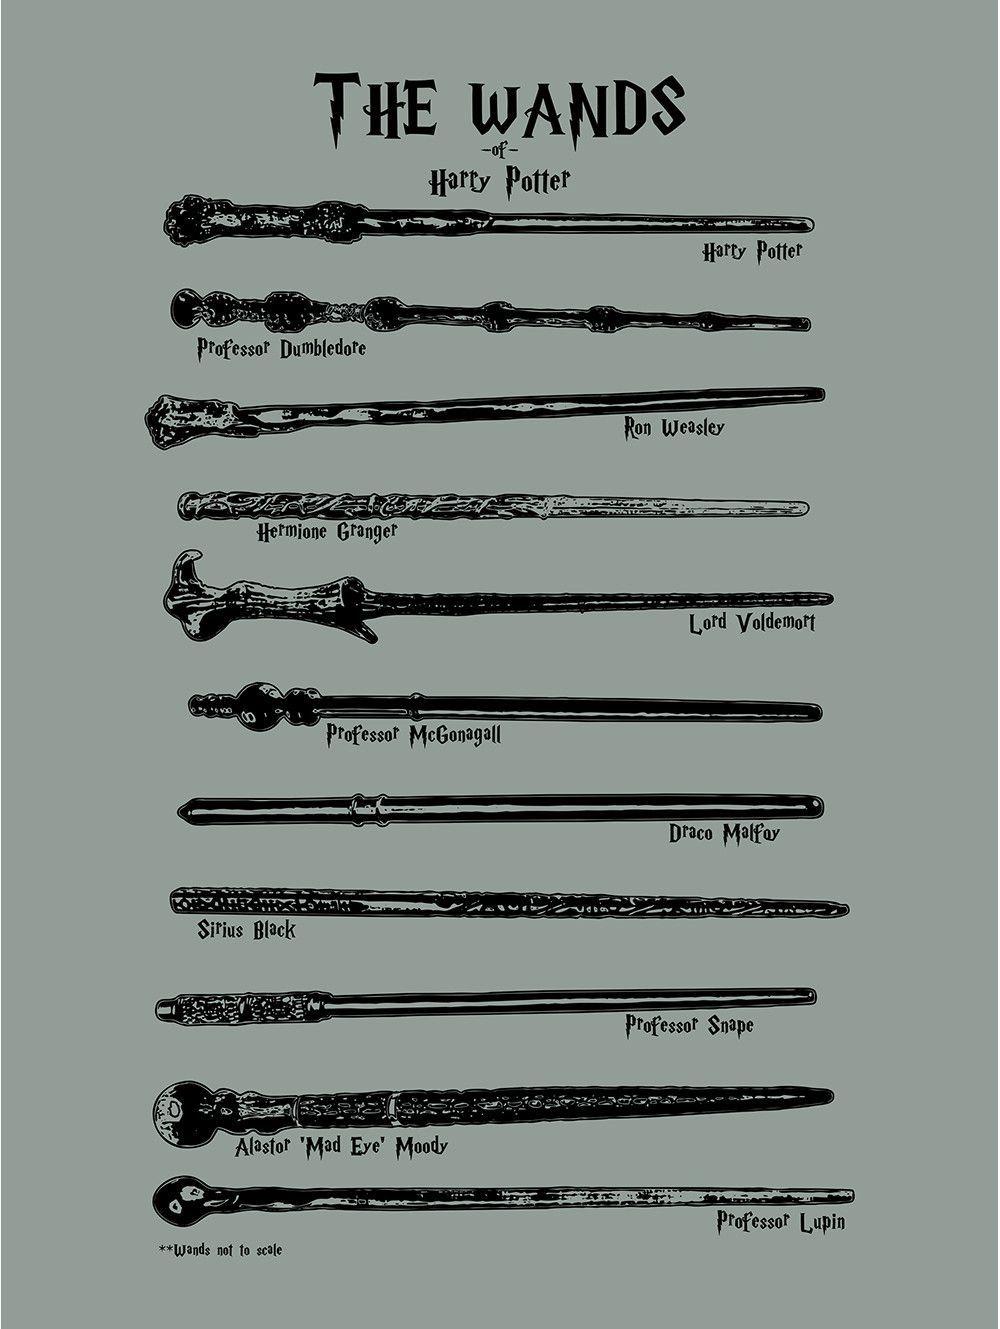 harry potter wands list